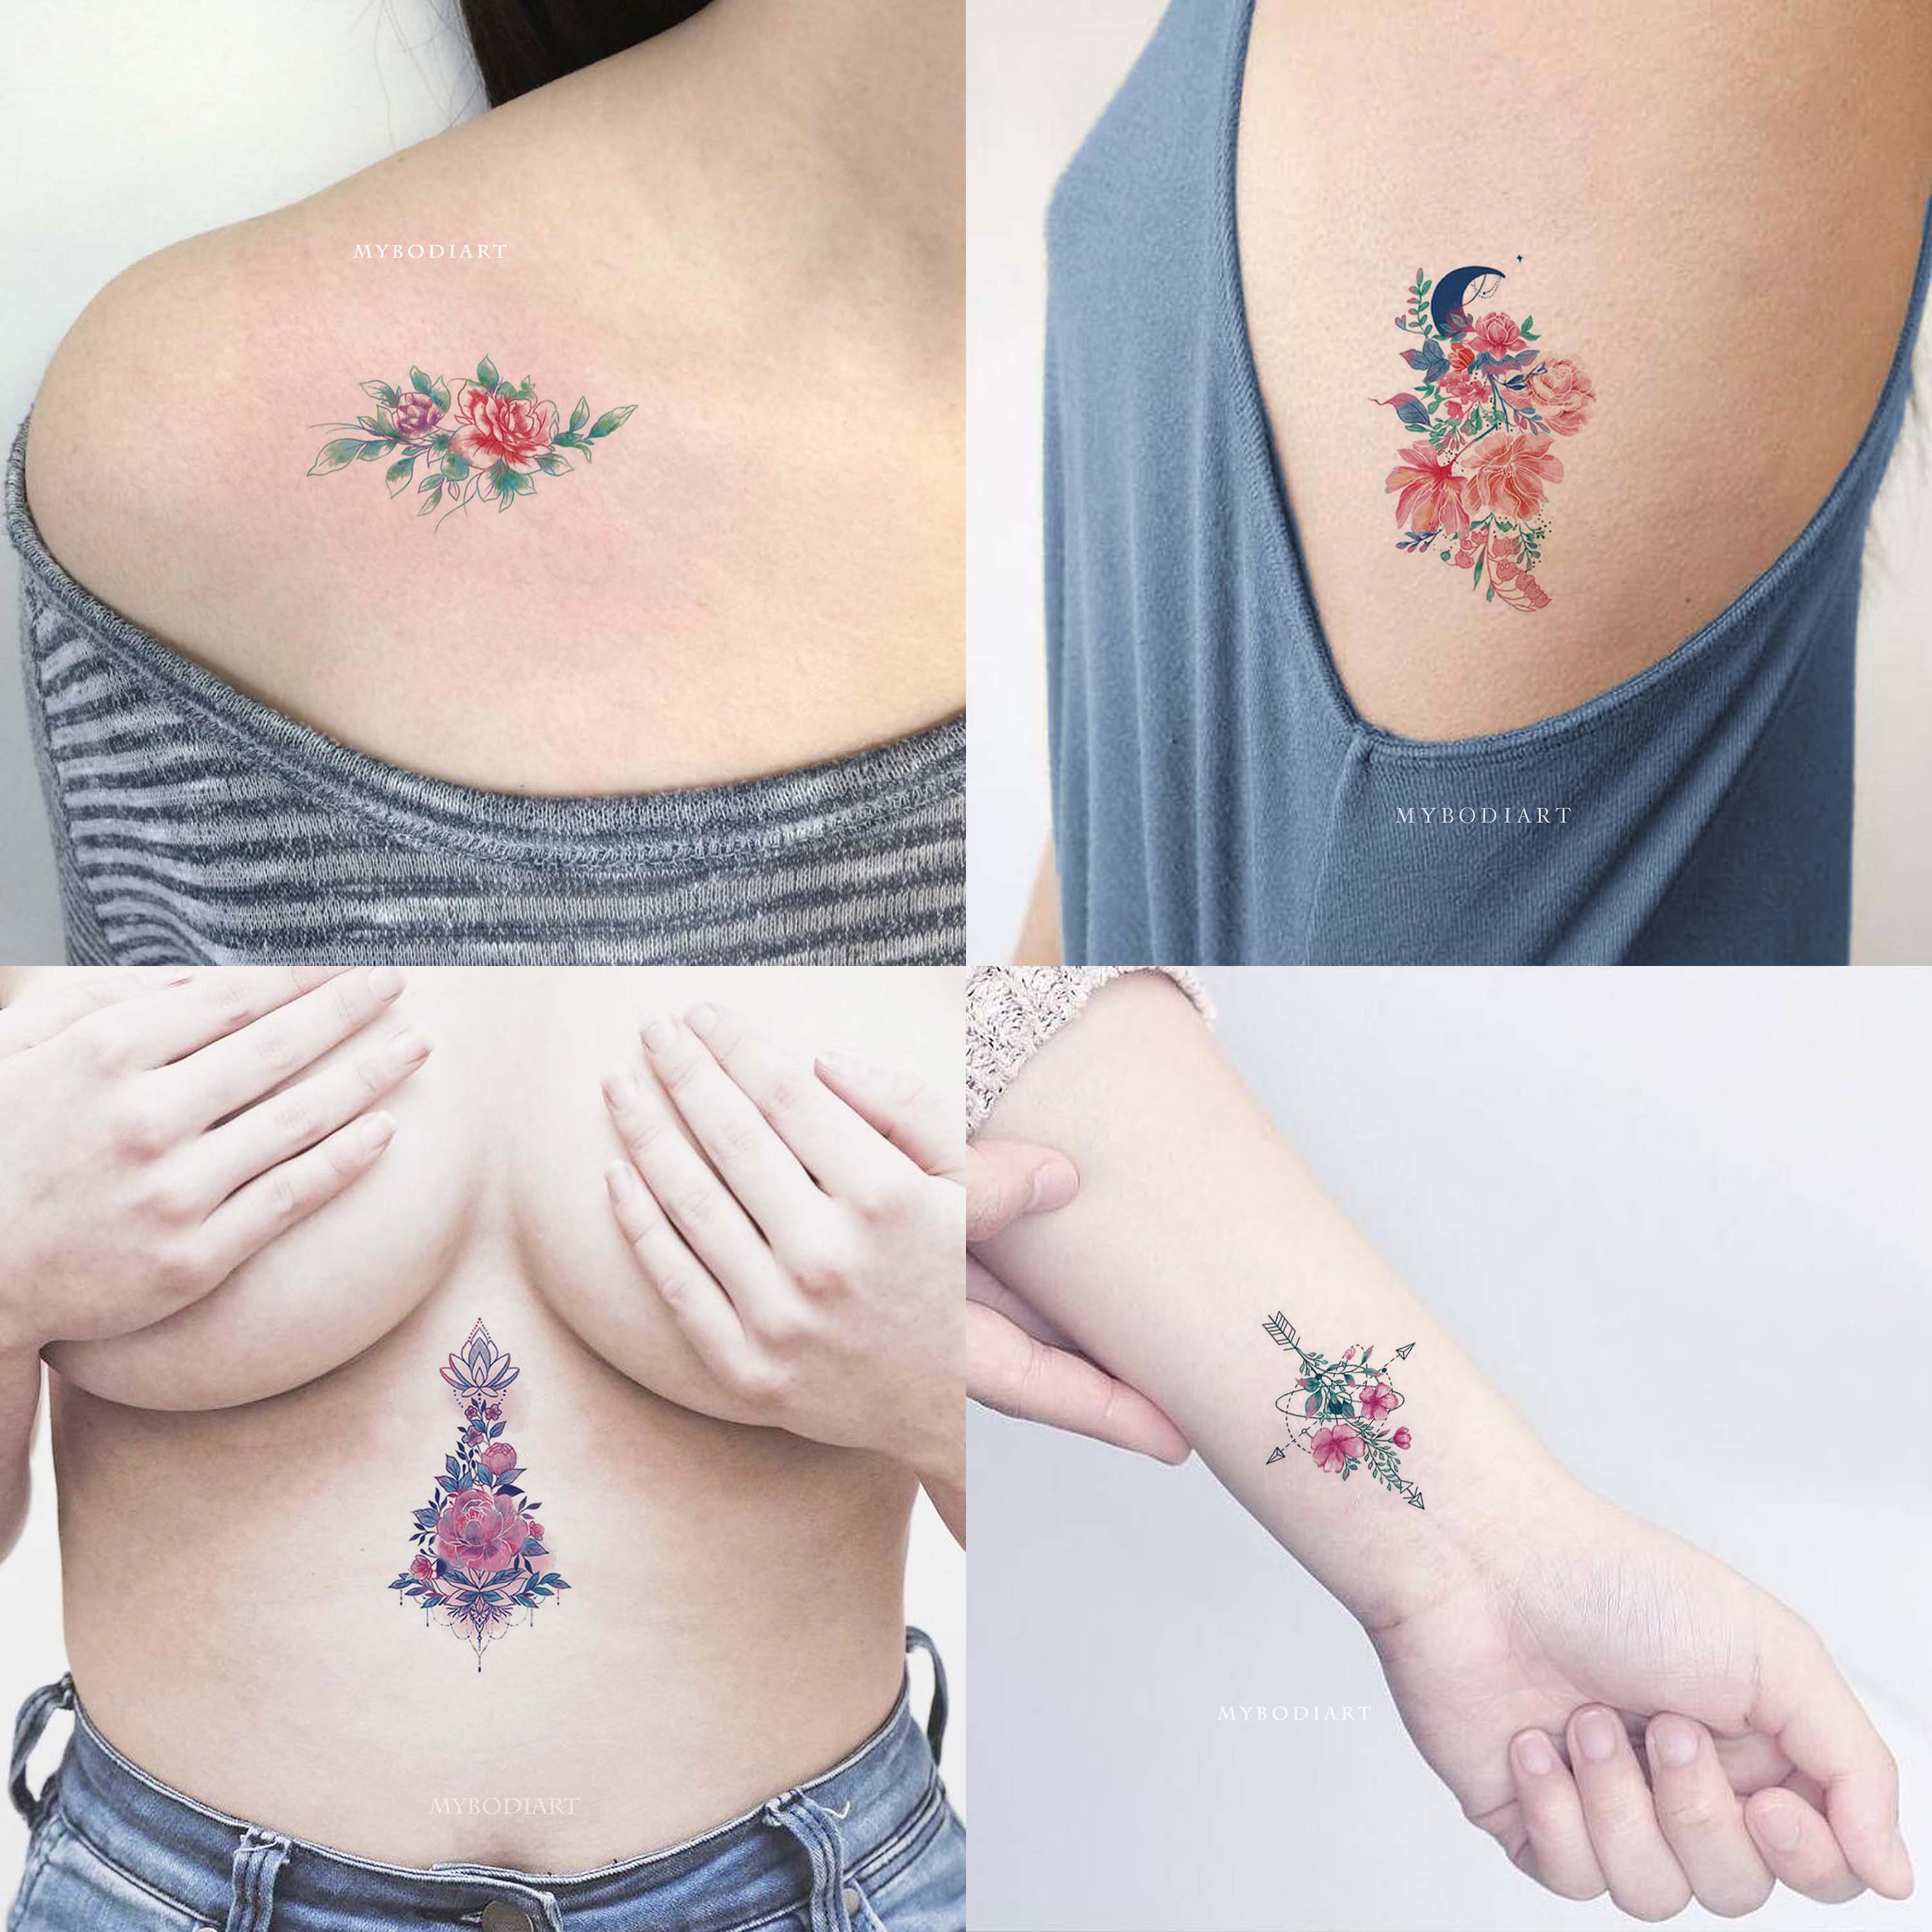 Minimalist flower tattoo on the wrist